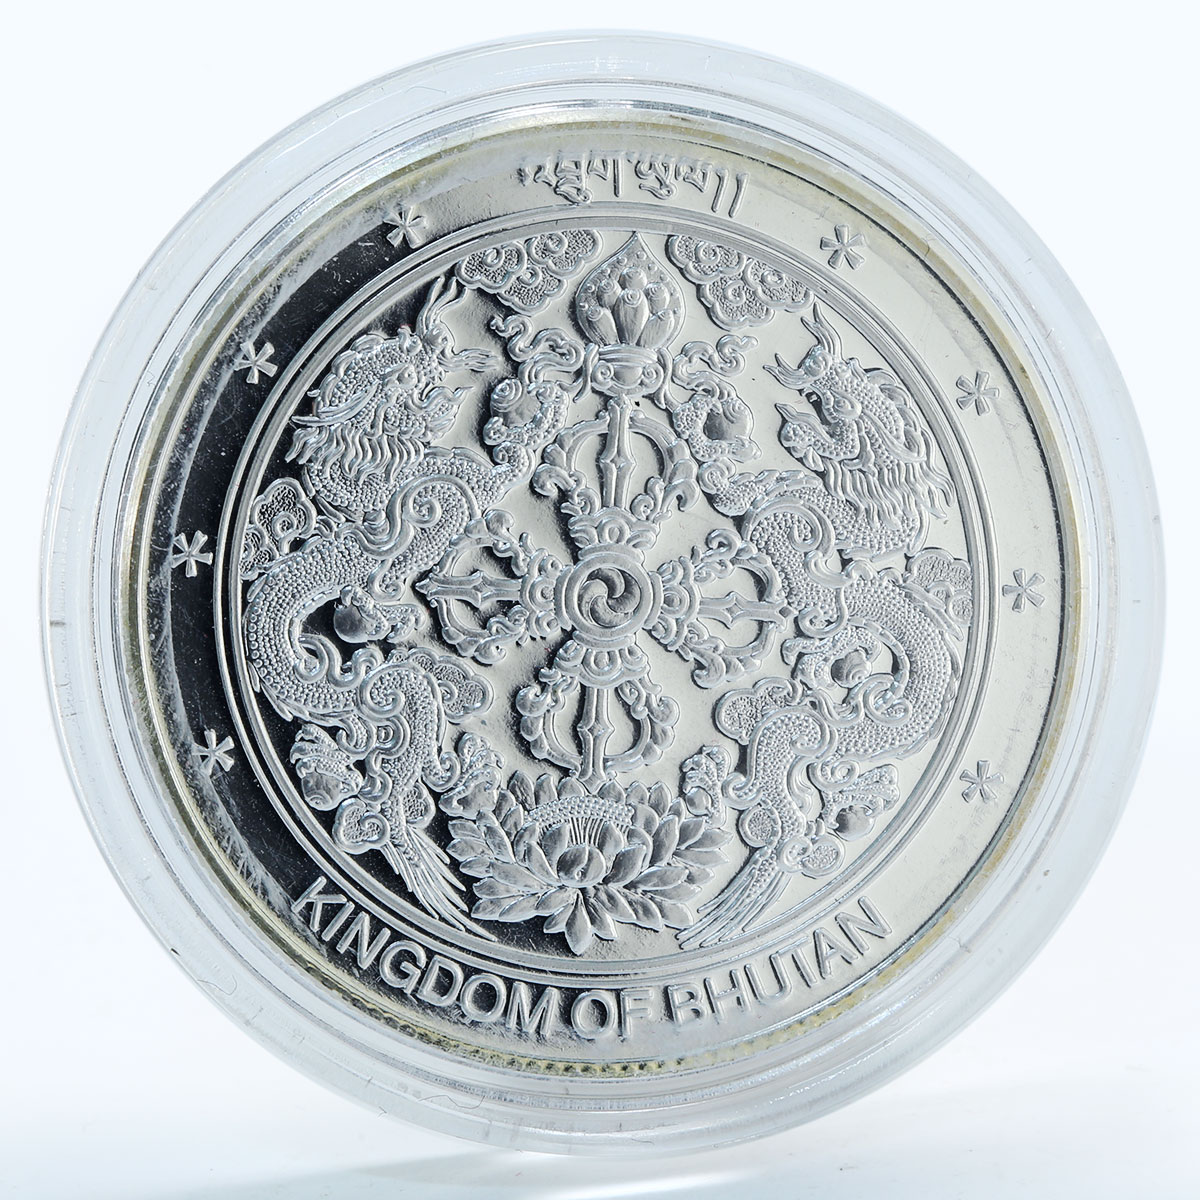 Bhutan 250 ngultrum Formula 1 World Champion silver coin 2005